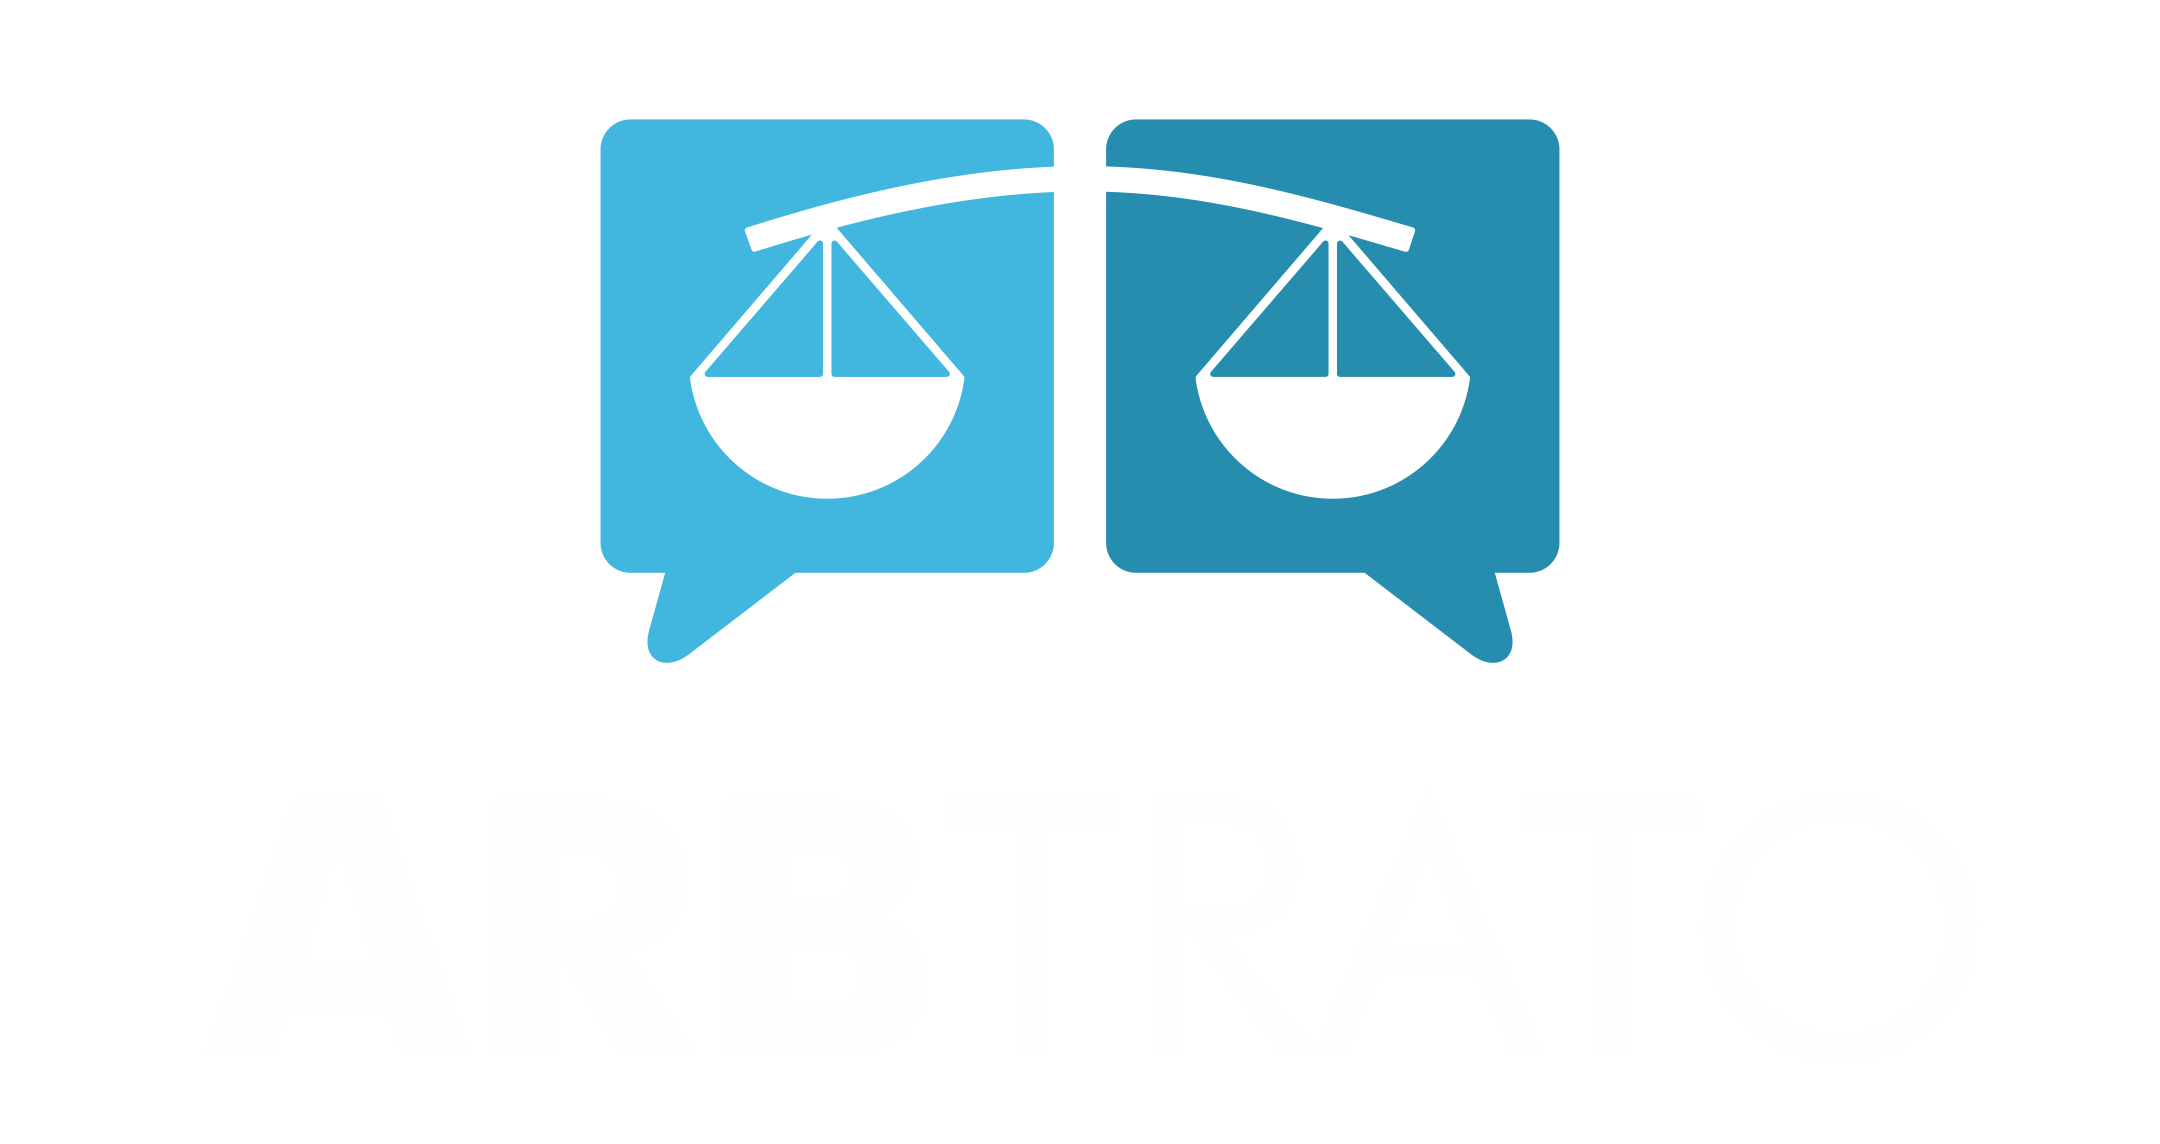 Arbtrato - Arbitragem Online